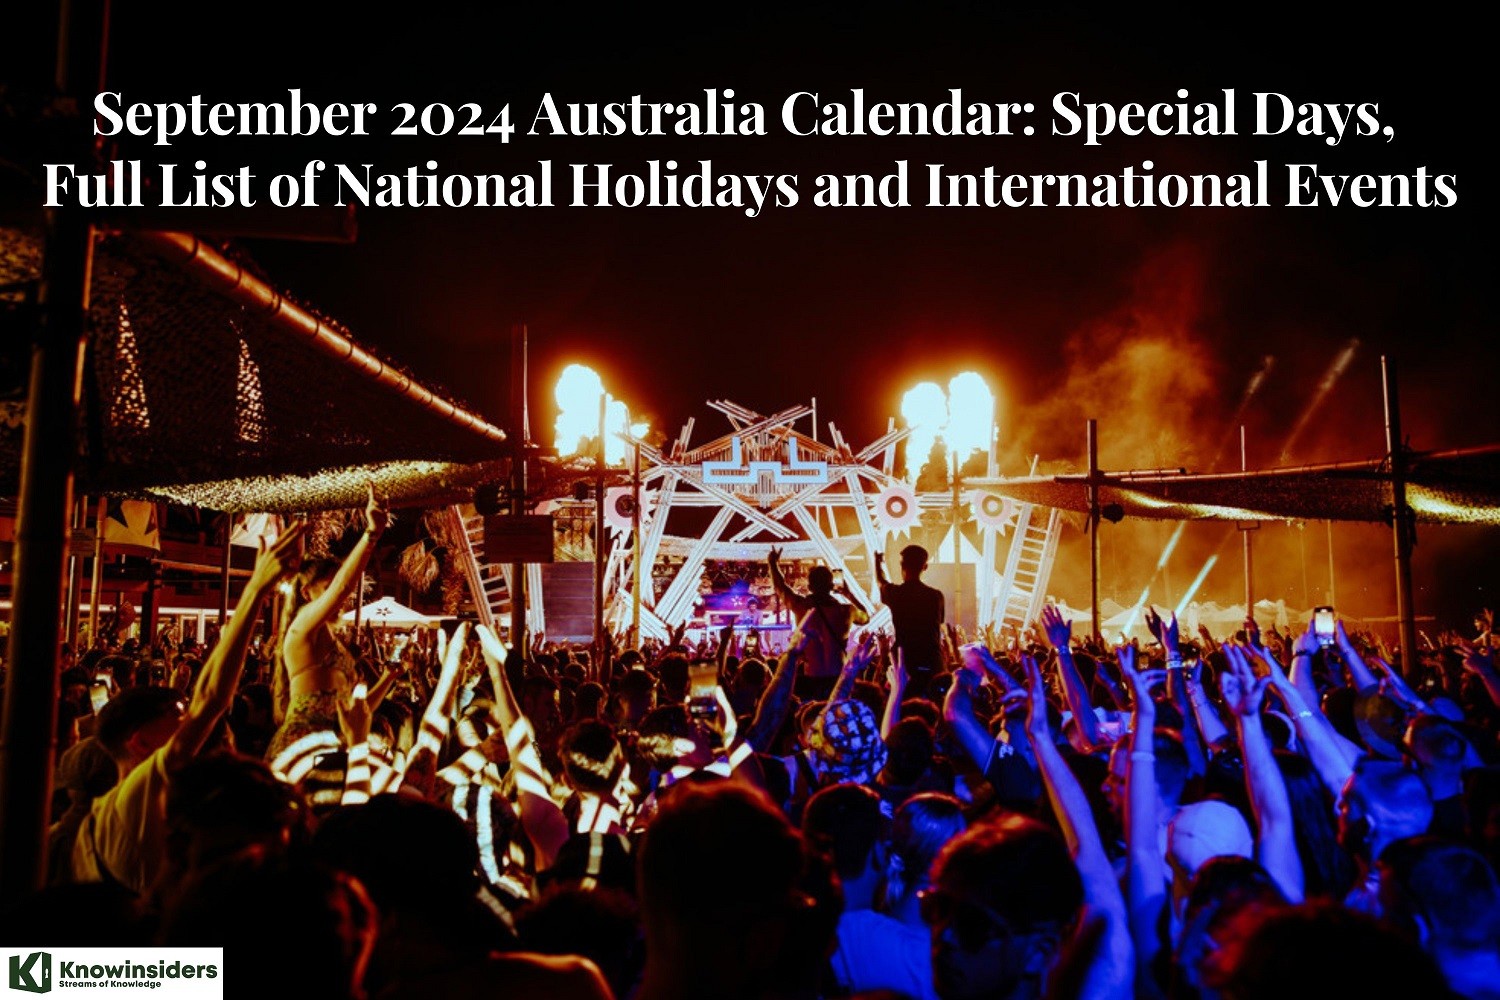 September 2024 Australia Calendar: Special Days, Full List of National Holidays and International Events